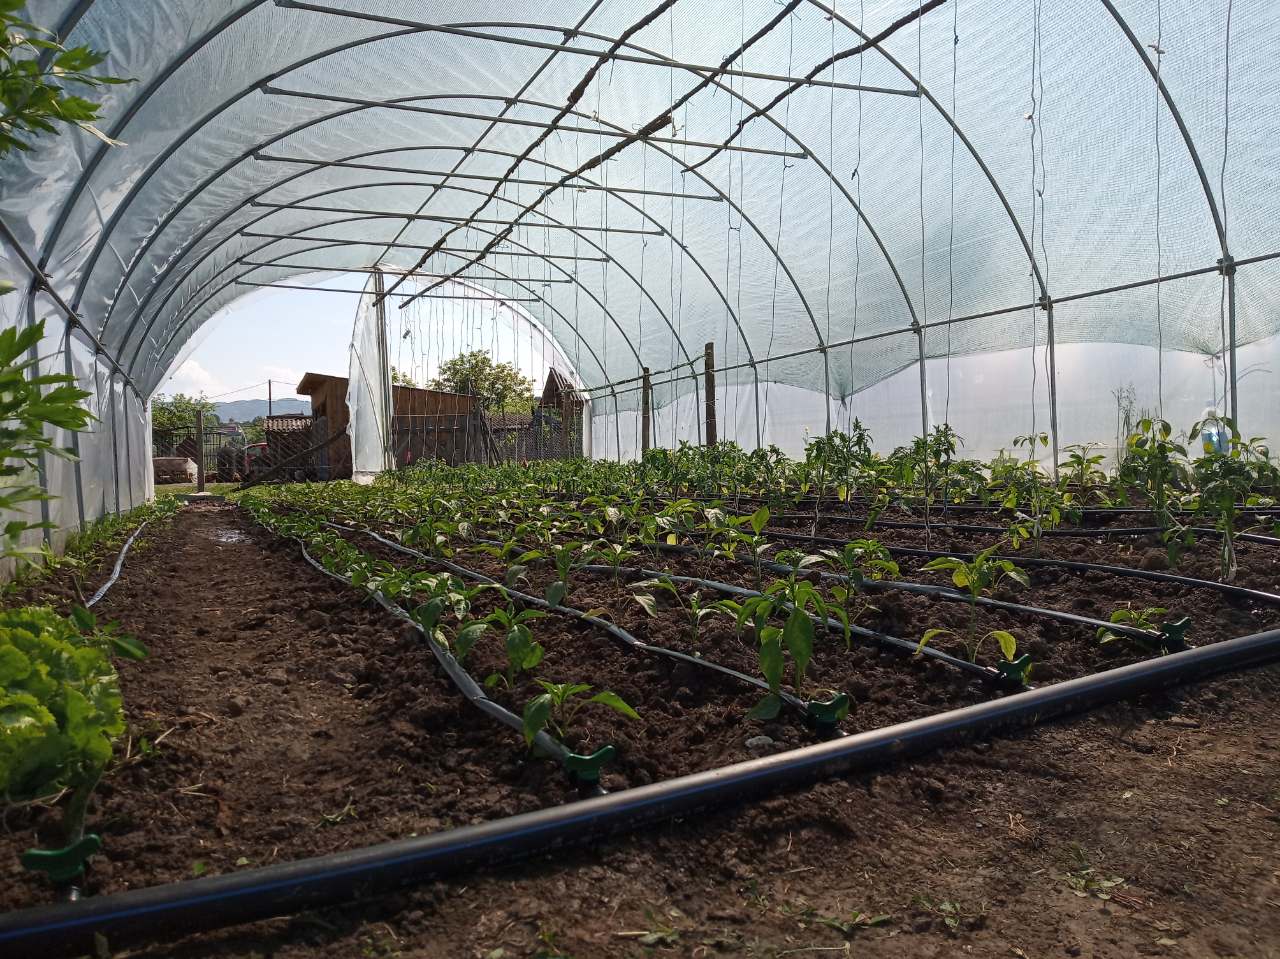 Prihrana paradajza i paprike kroz sistem kap kap | Agrosavjet